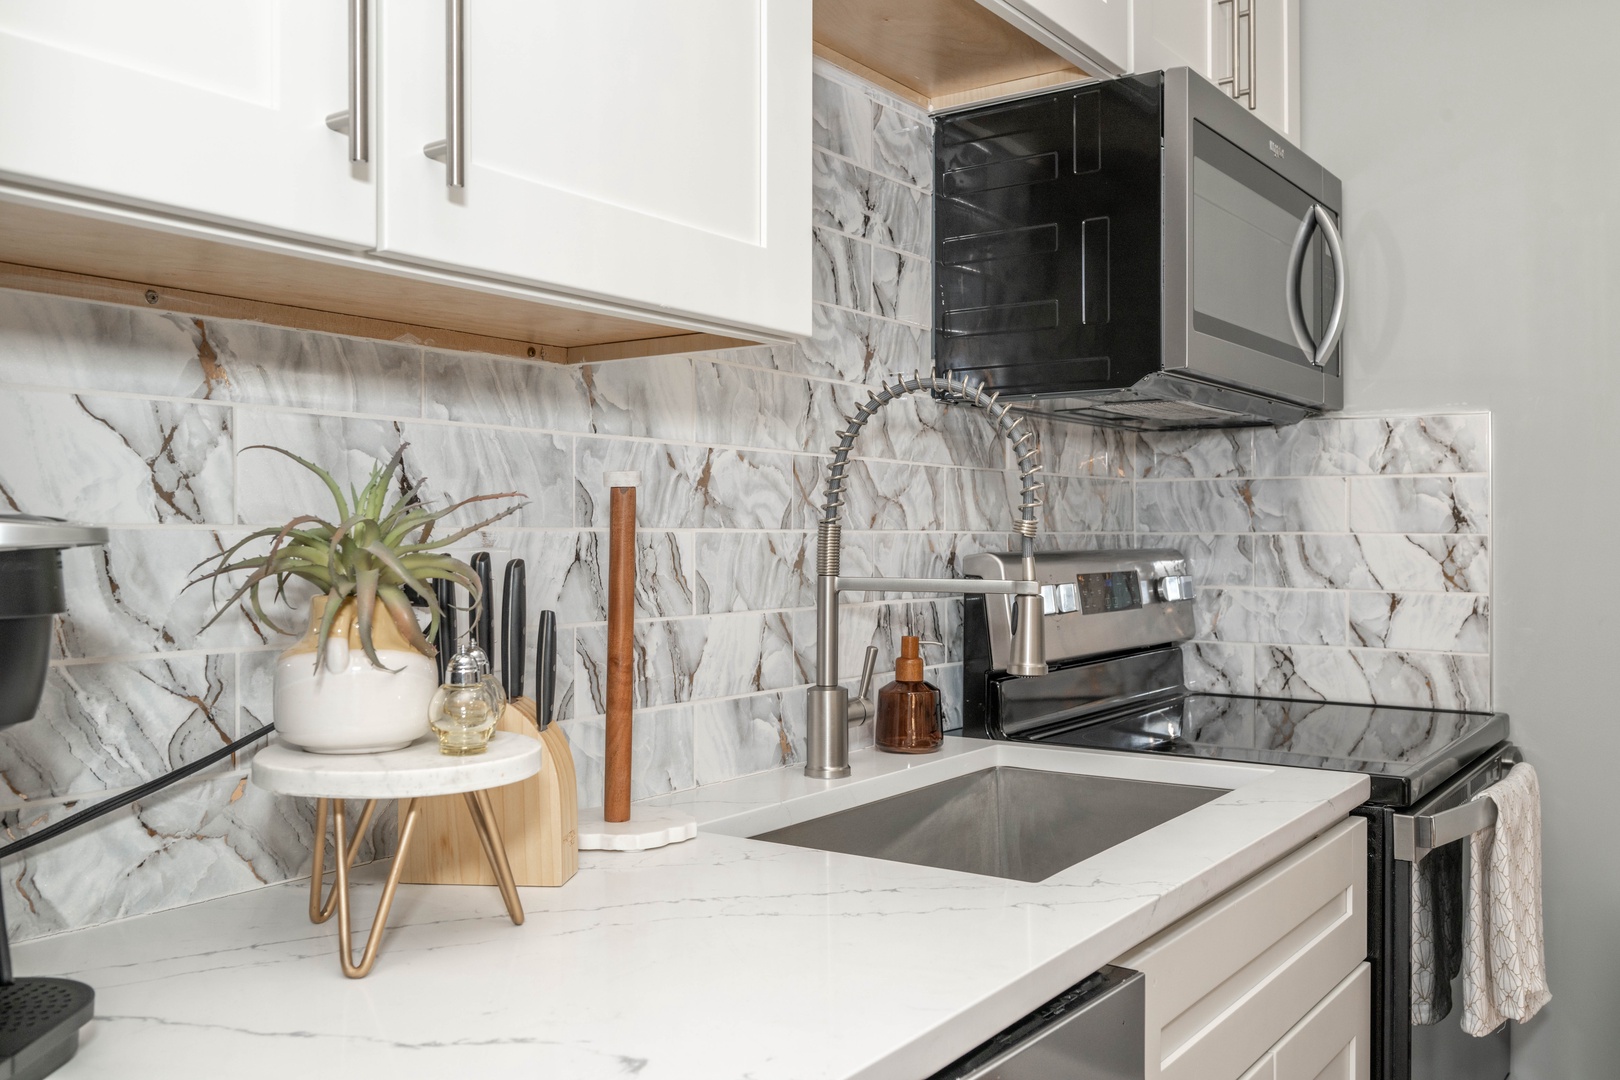 The modern kitchen provides plenty of space & homey comforts